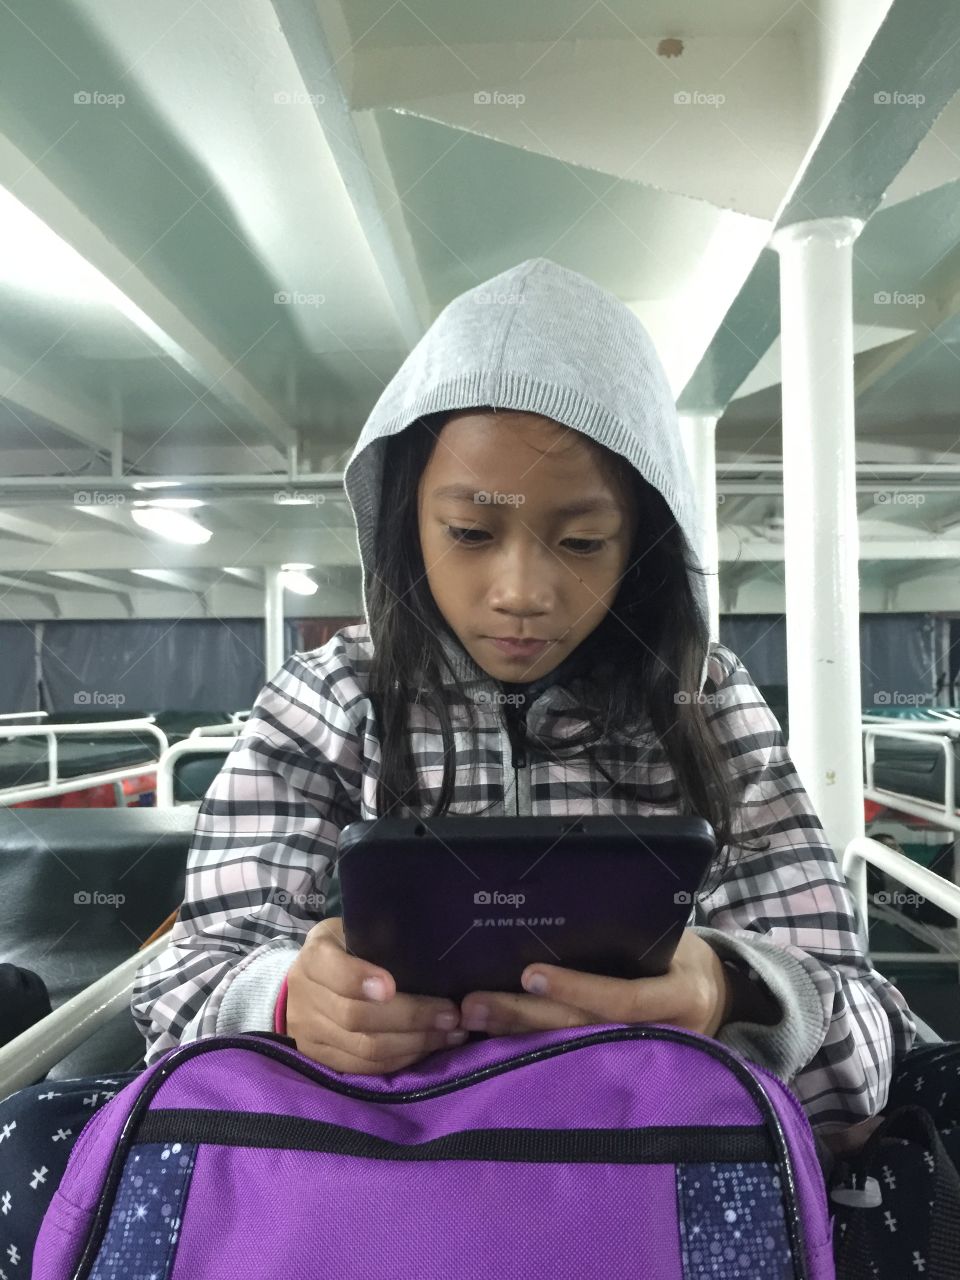 A girl using technology